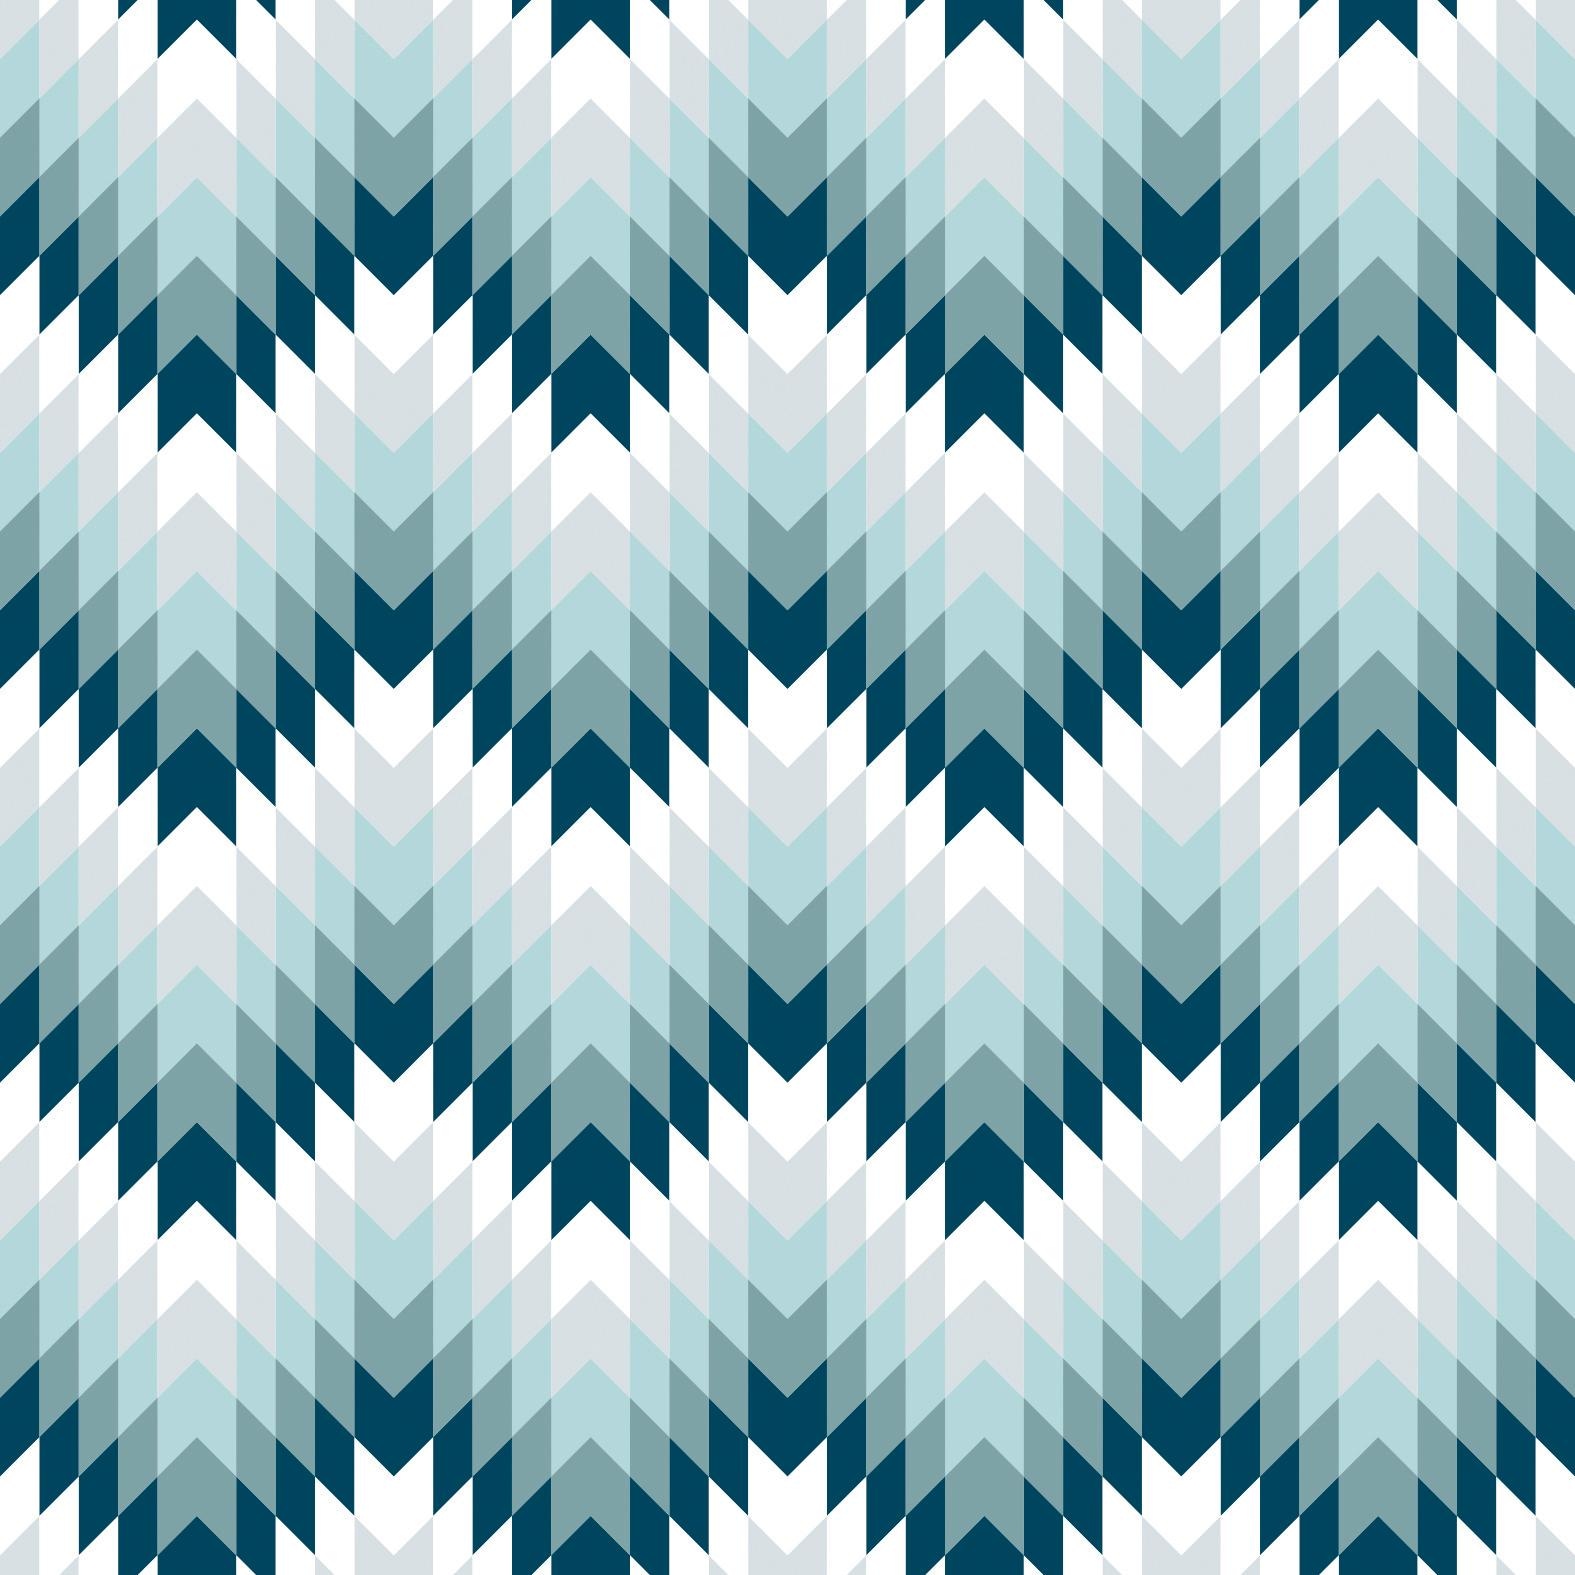 queence Dekokissen »Blau & Weiß Muster«, Kissenhülle ohne Füllung, 1 Stück